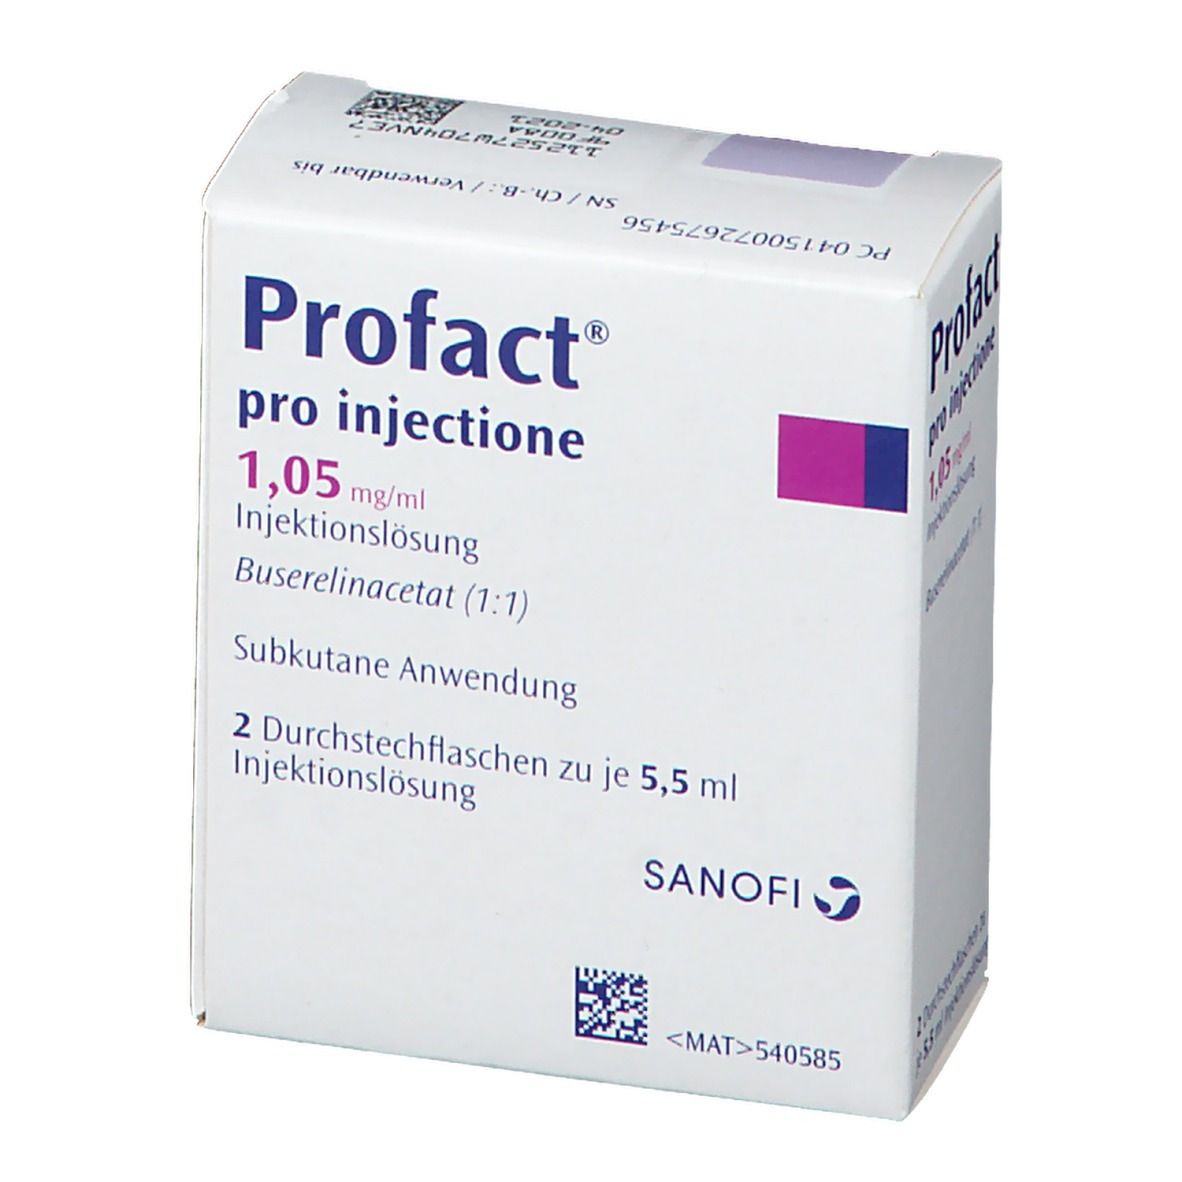 Profact® pro injectione 1,05 mg/ml